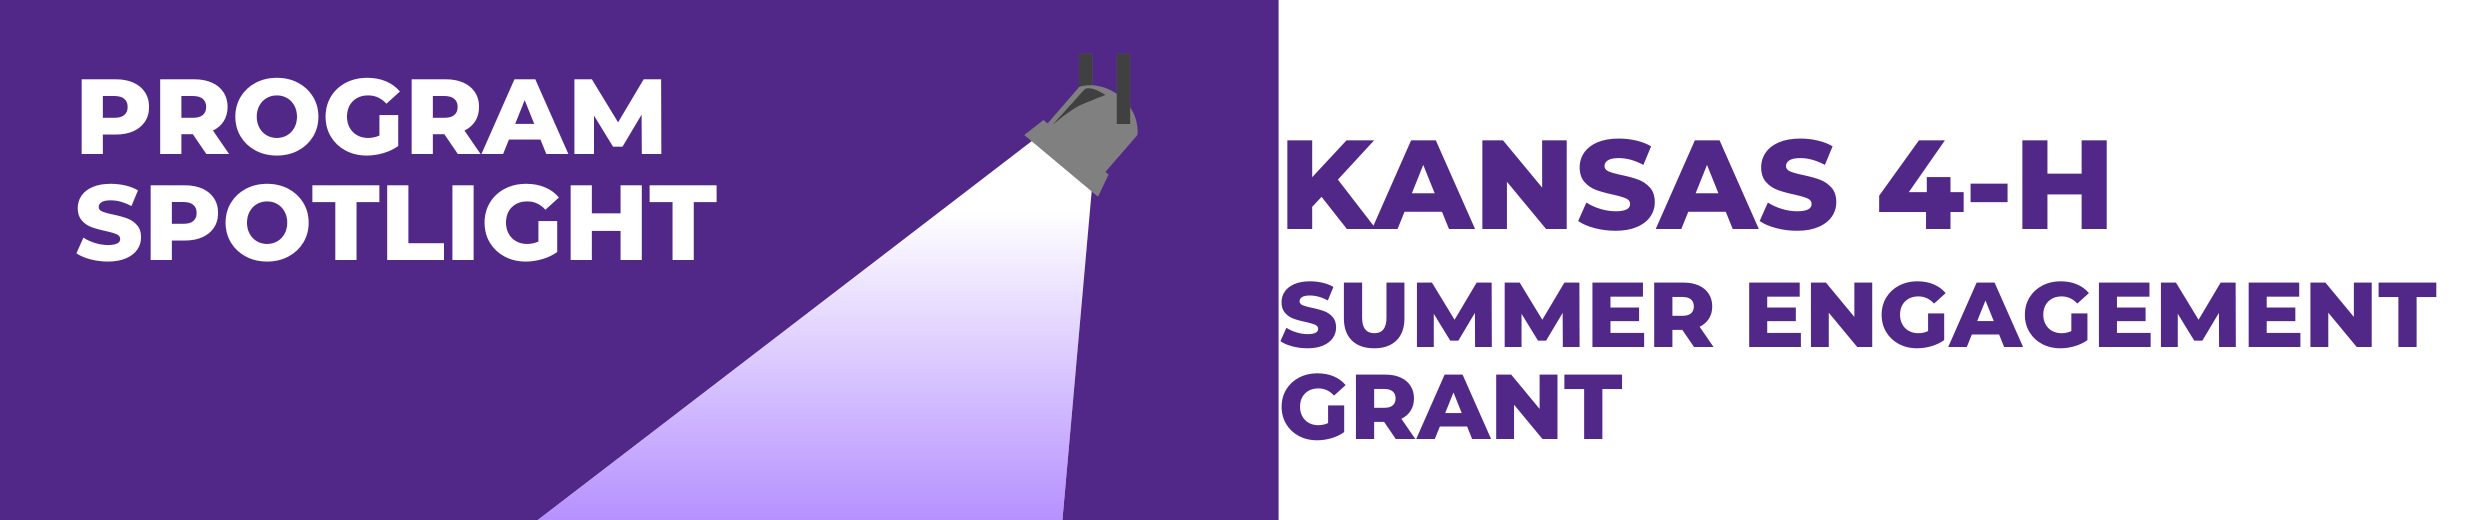 Program Spotlight.  Kansas 4-H Summer Engagement Grant